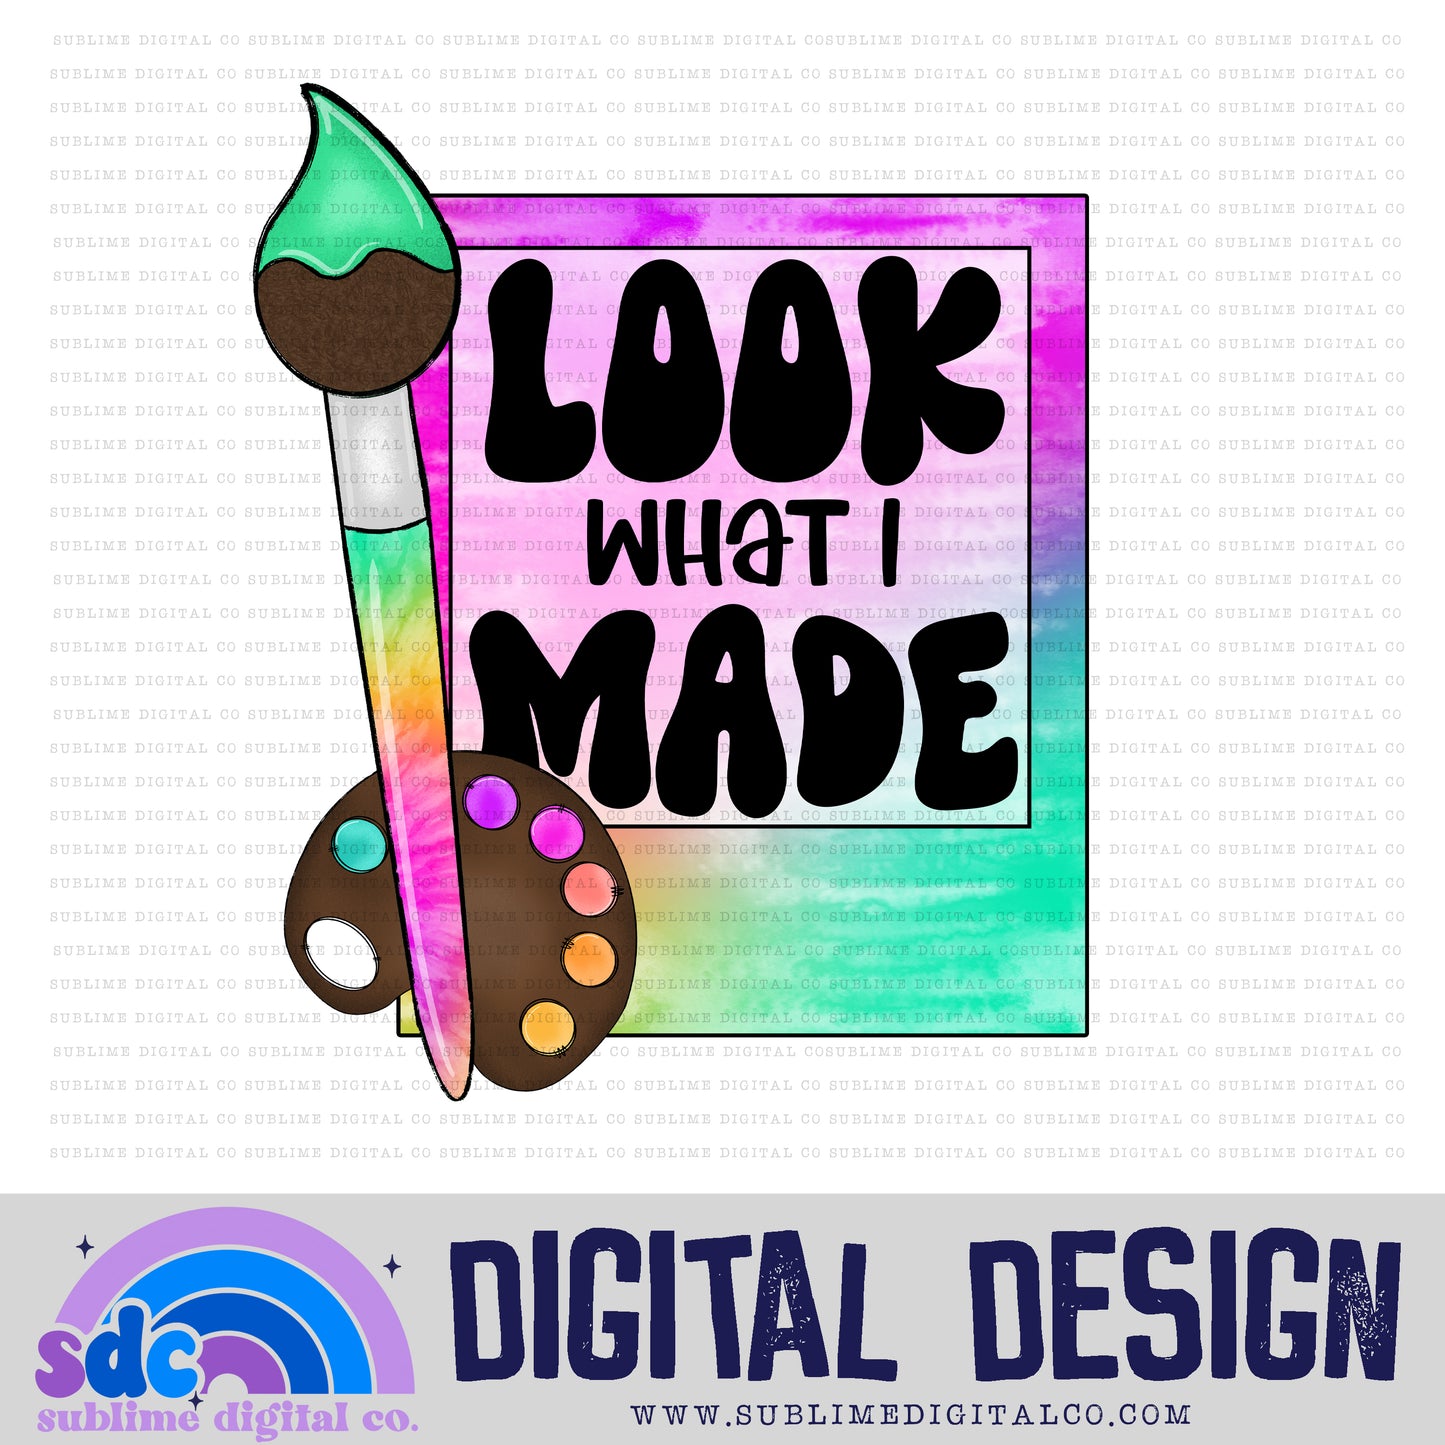 Tie Dye School Design Drive • School • Instant Download • Sublimation Design